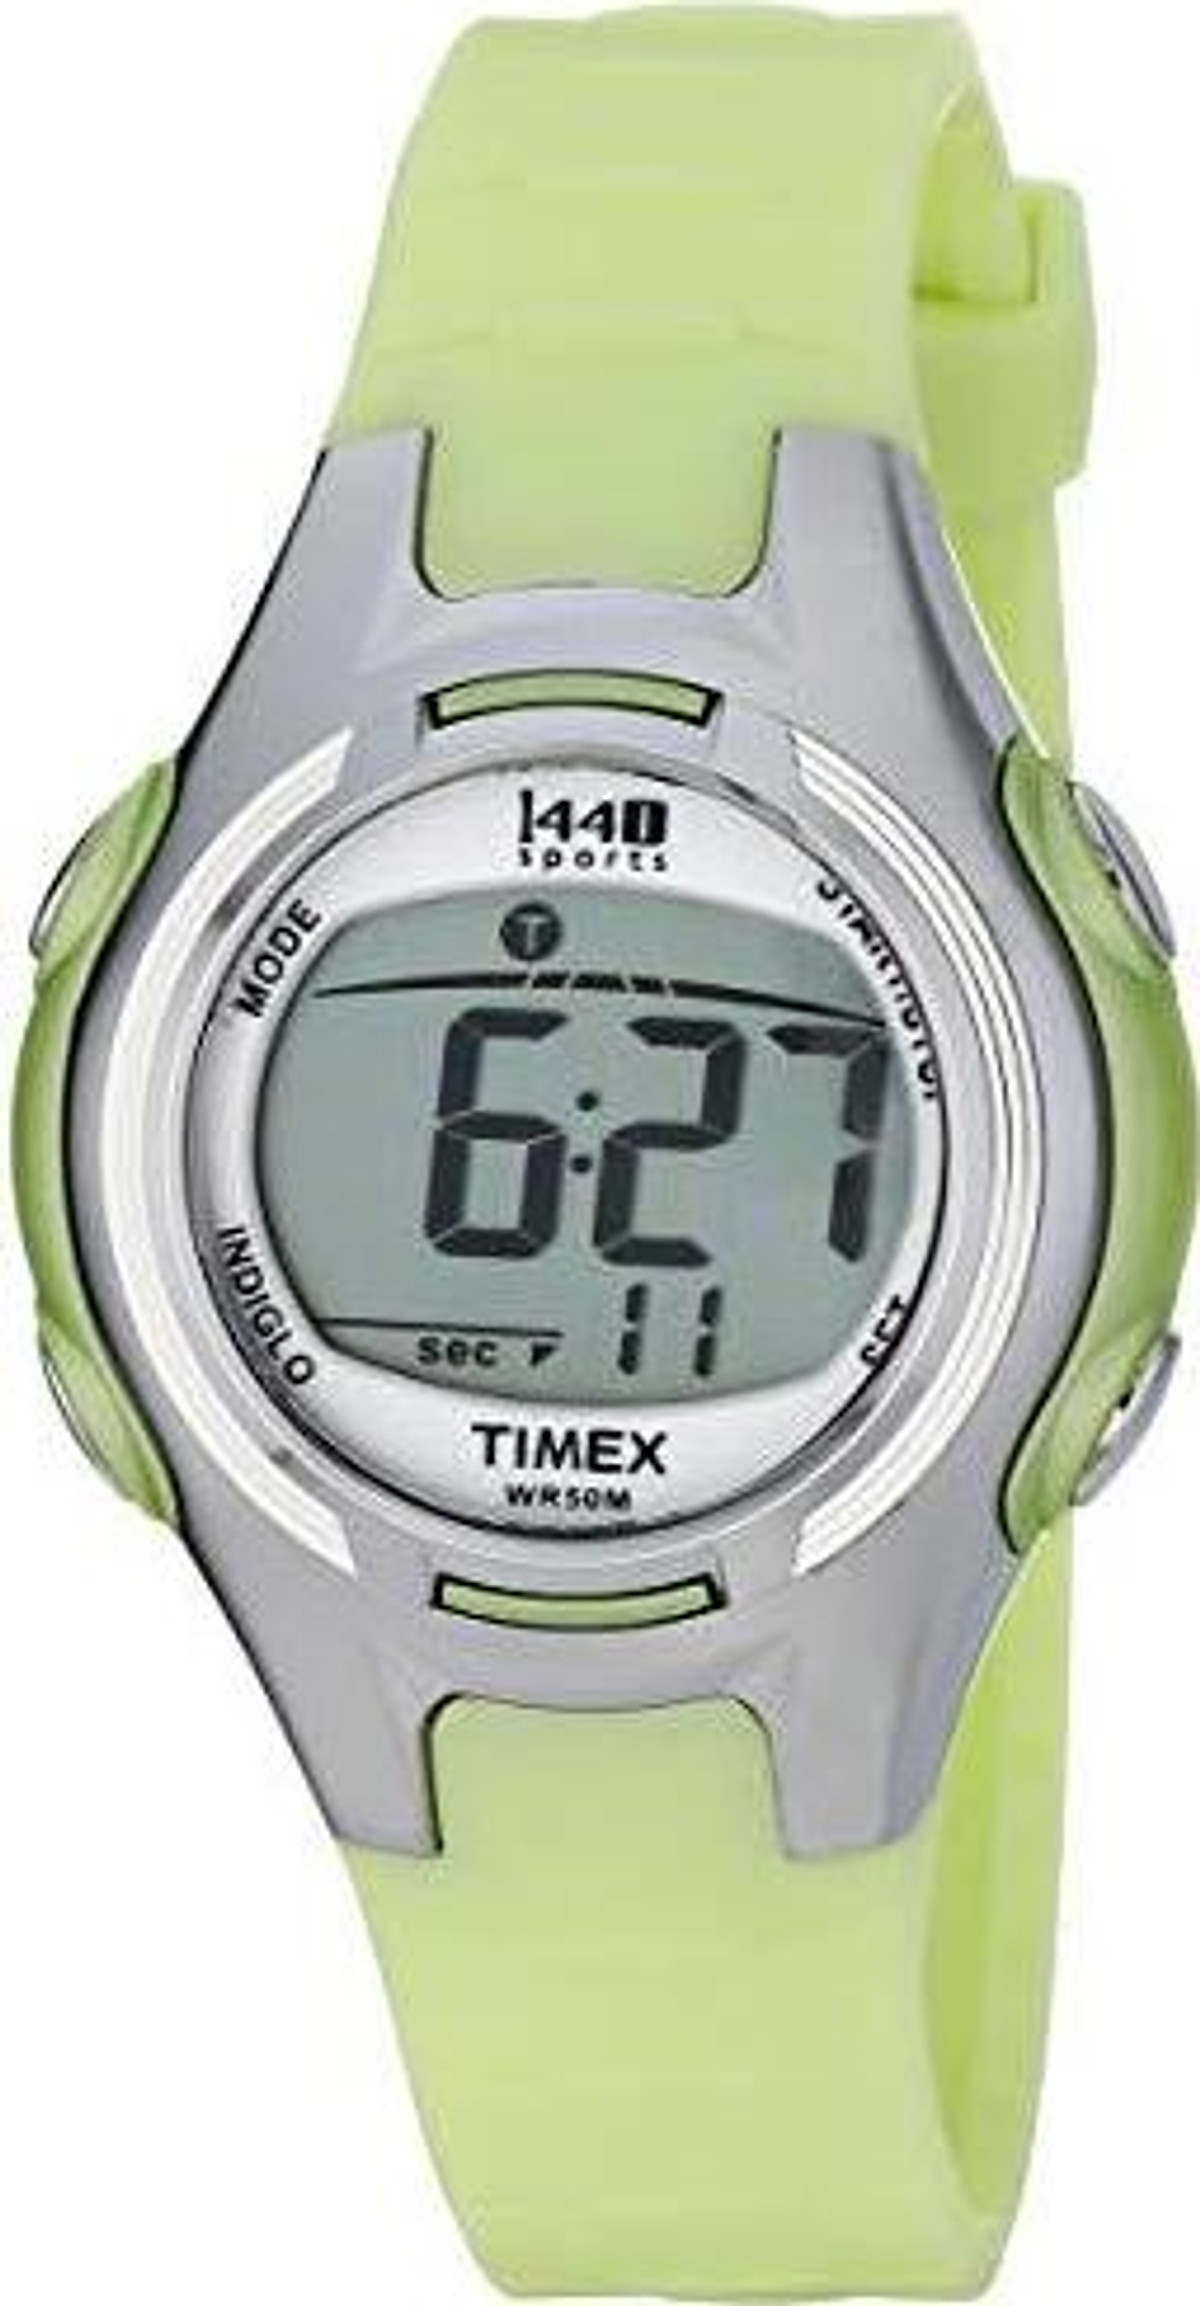 Mua Timex Women's T5K081 1440 Digital Watch with Light-Green Resin Strap